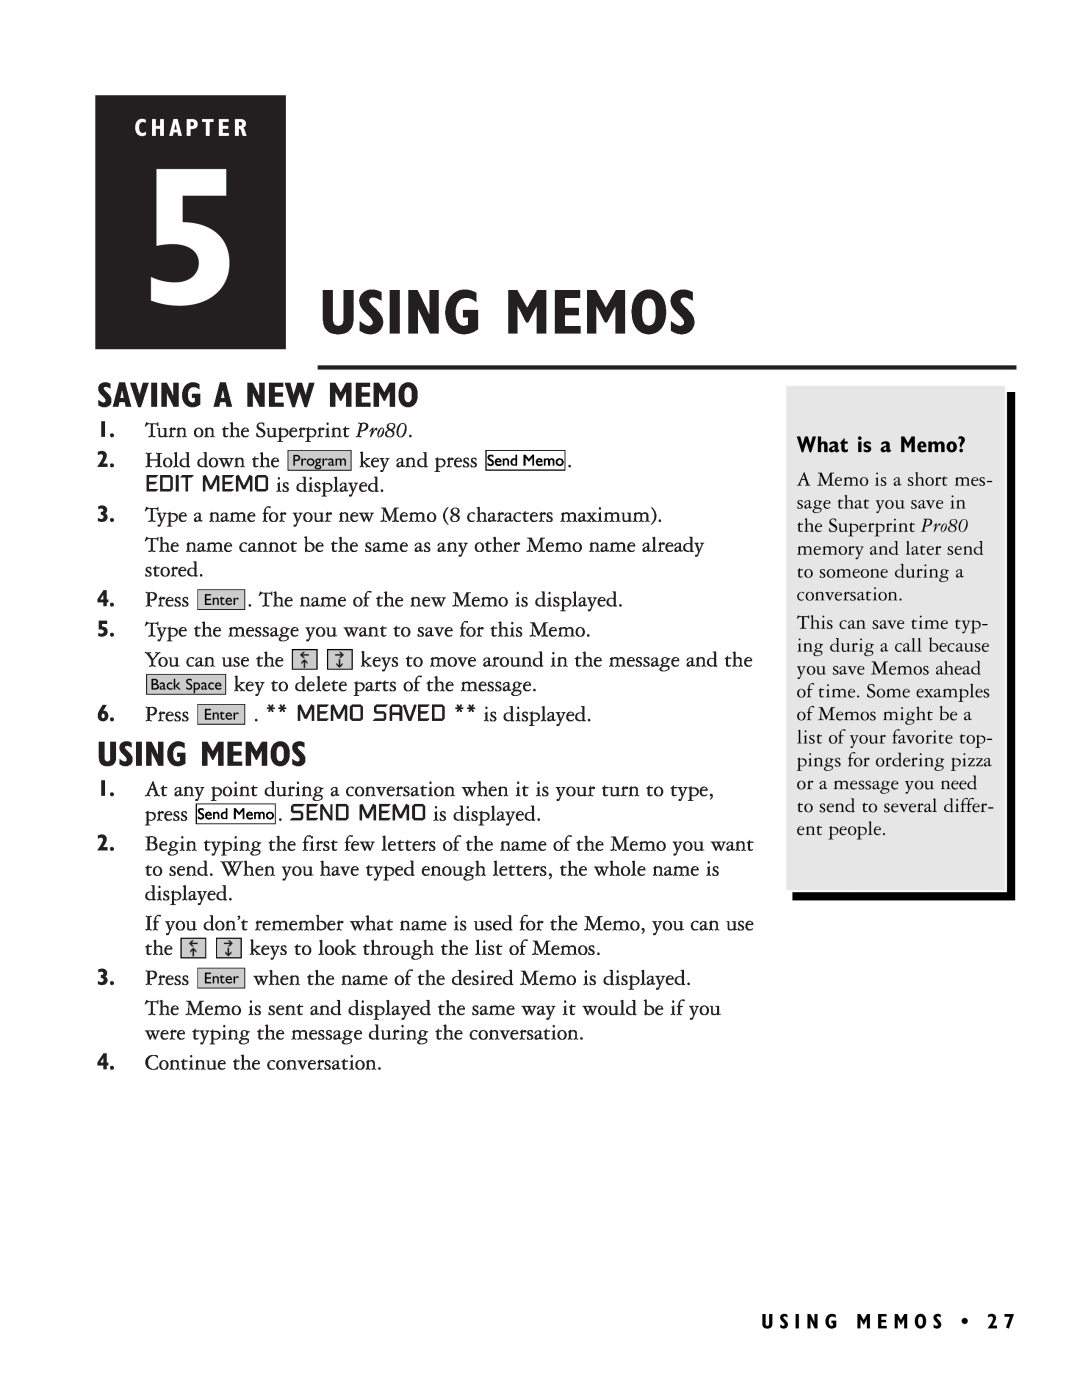 Ultratec PRO80TM manual Using Memos, Saving A New Memo, C H A P T E R, What is a Memo? 